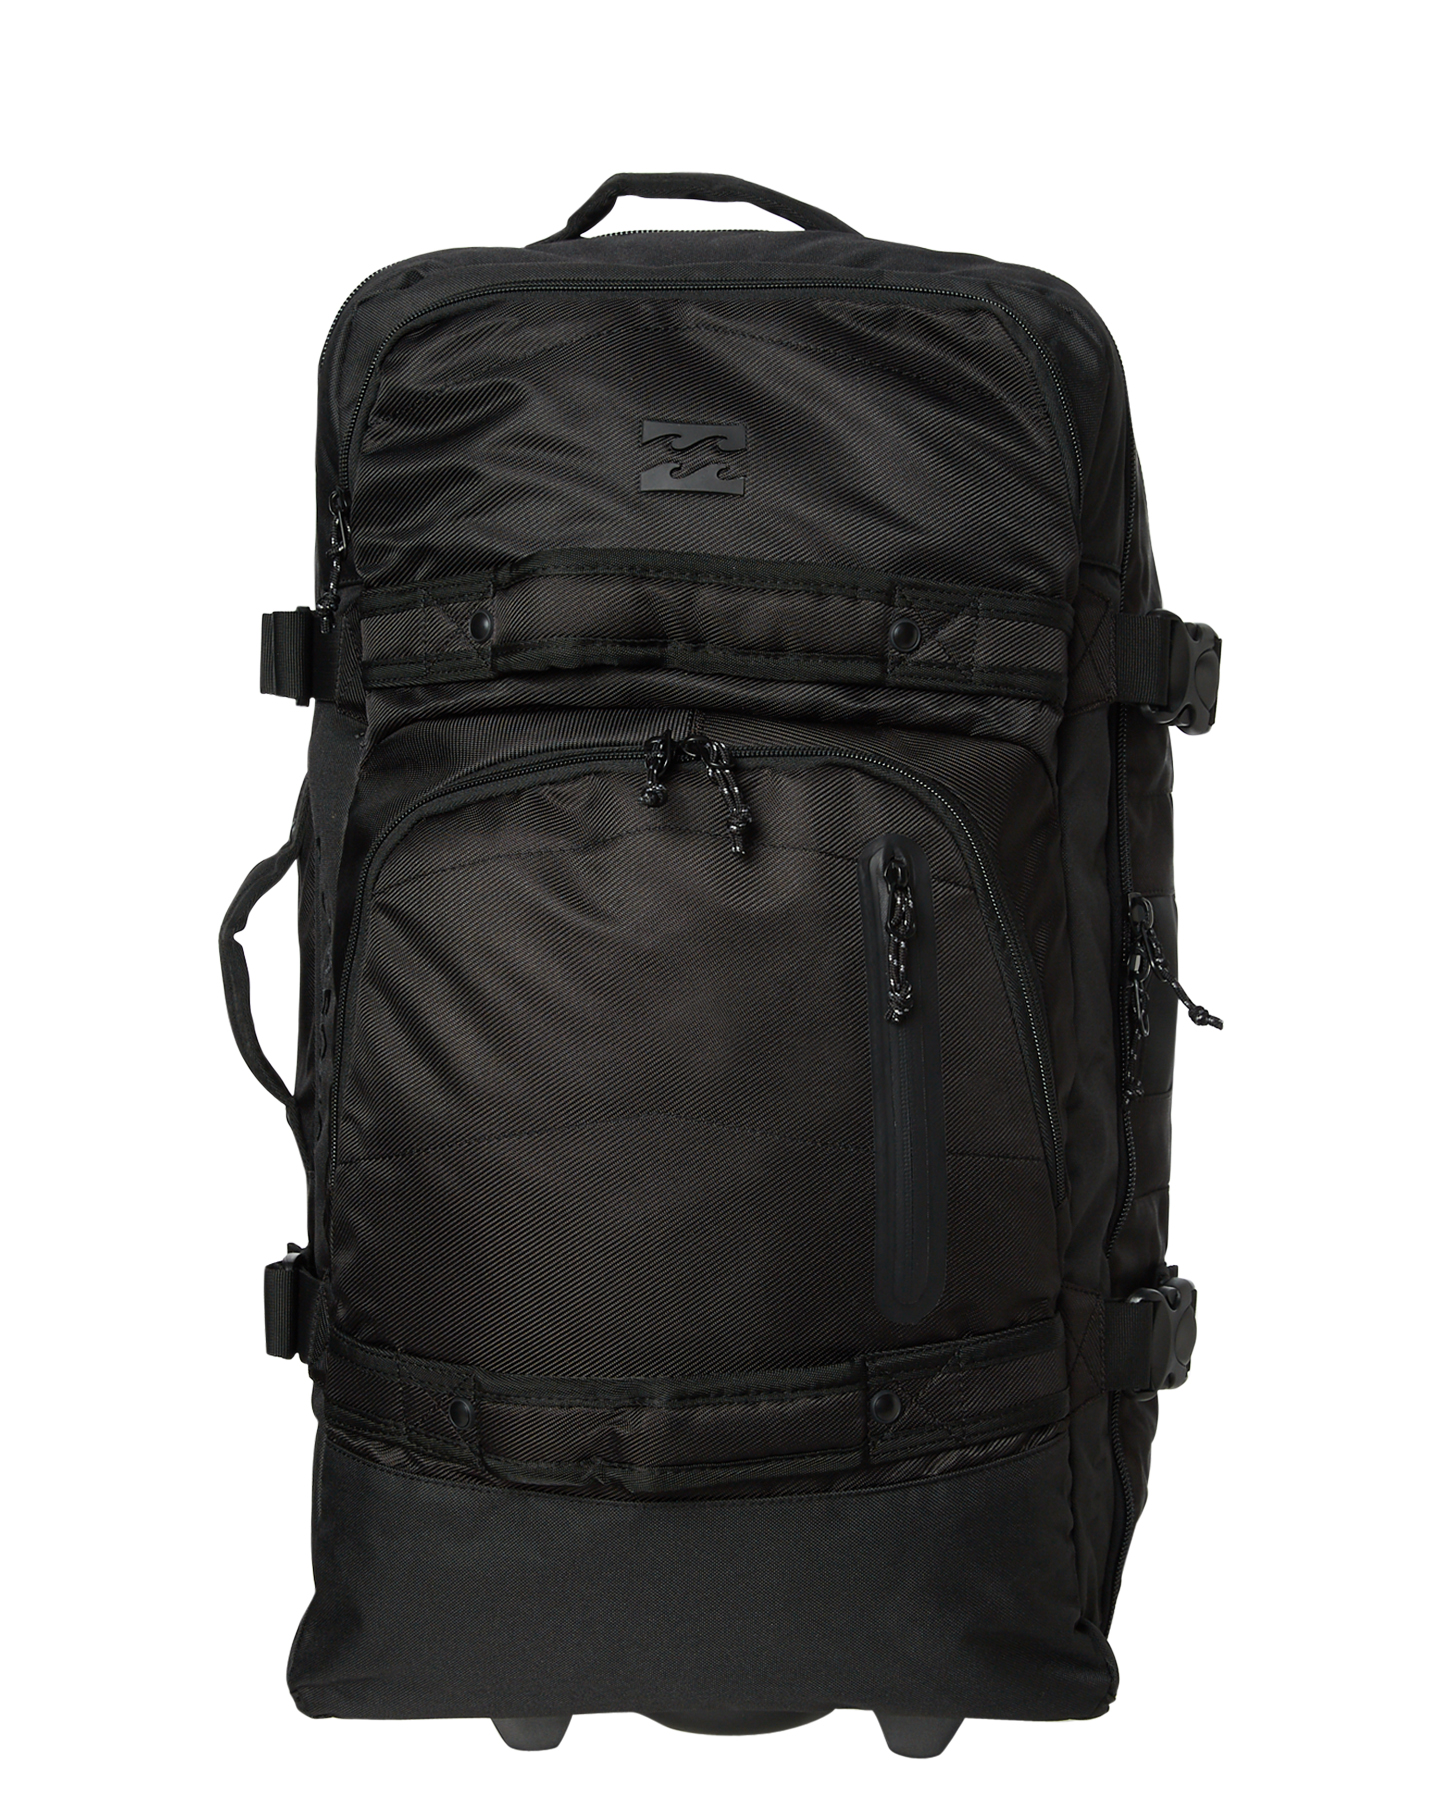 Billabong Men's 85L Booster Travel Bag Mesh Black | eBay